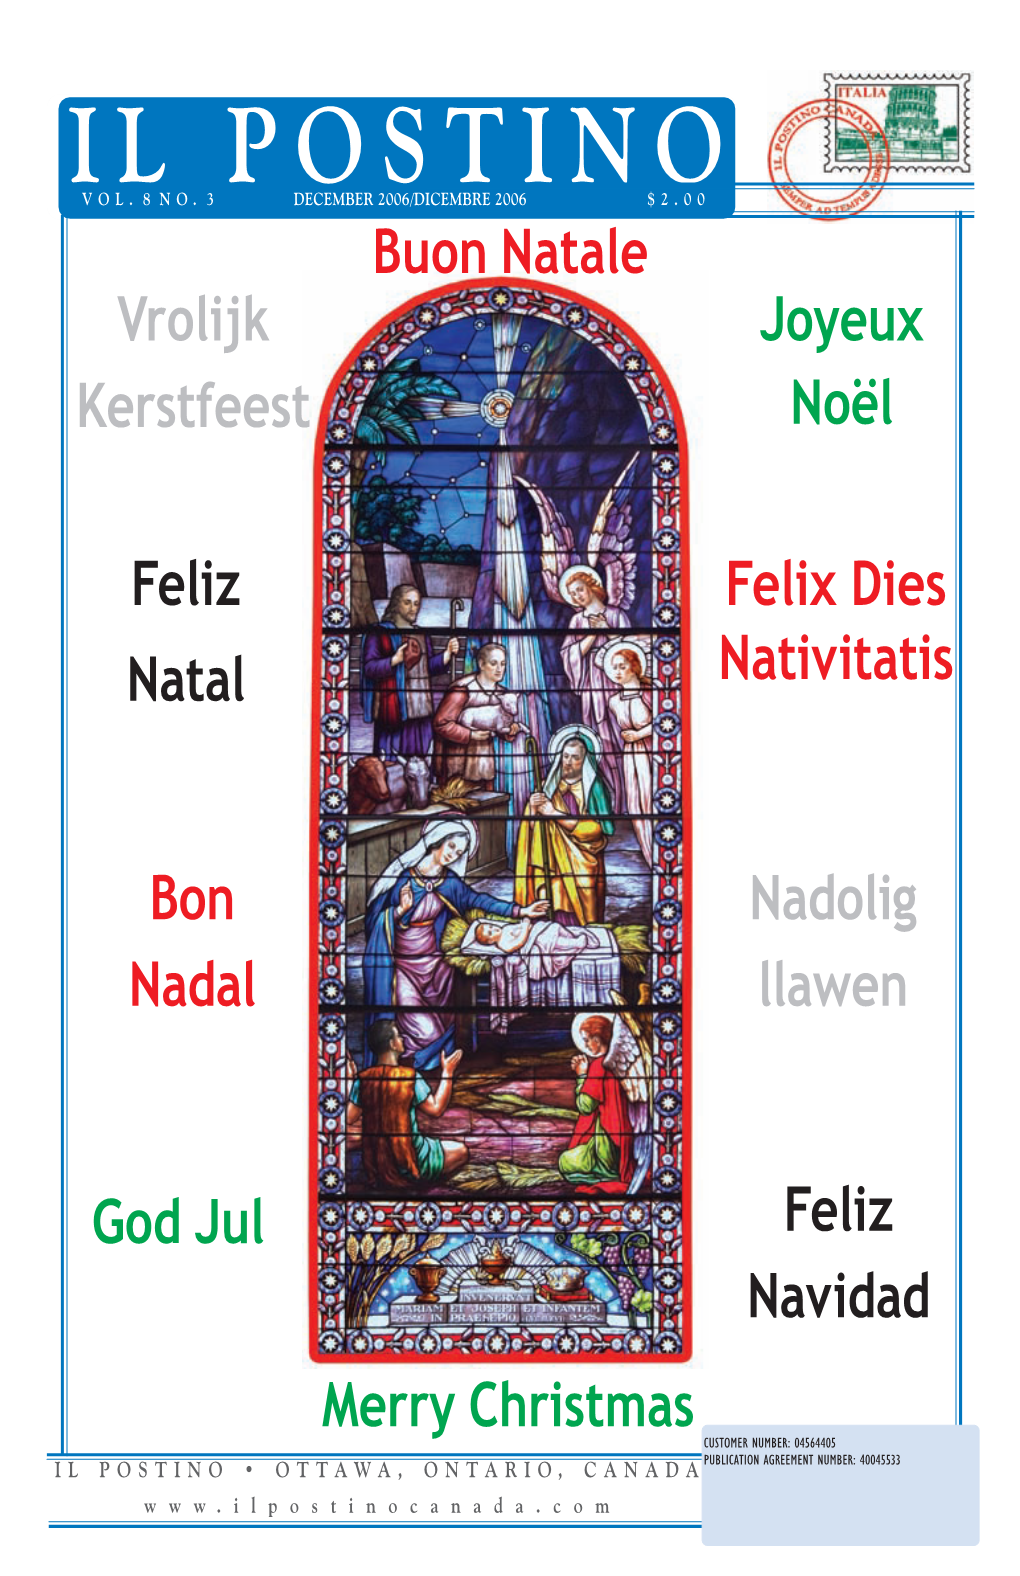 Joyeux Noël Felix Dies Nativitatis Merry Christmas Vrolijk Kerstfeest